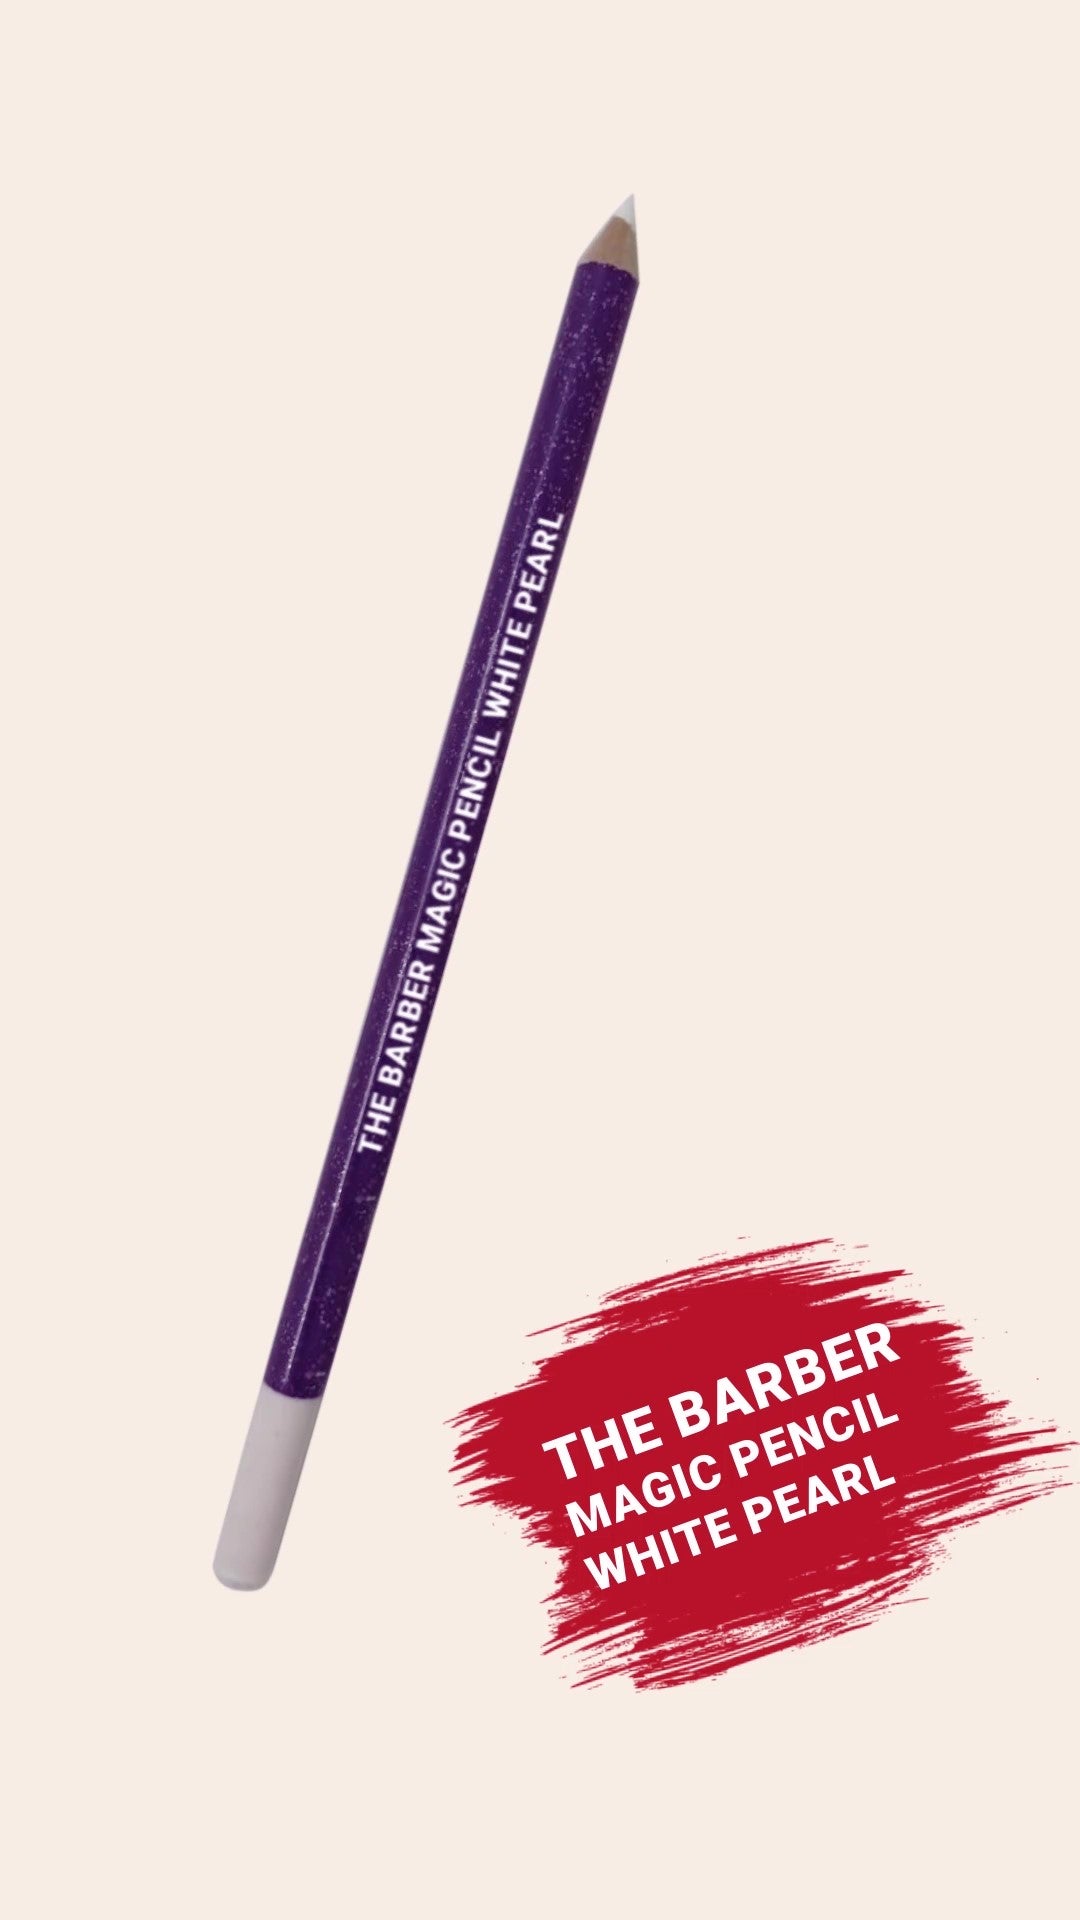 Barber Magic Pencil - White Pearl 6 - Pack